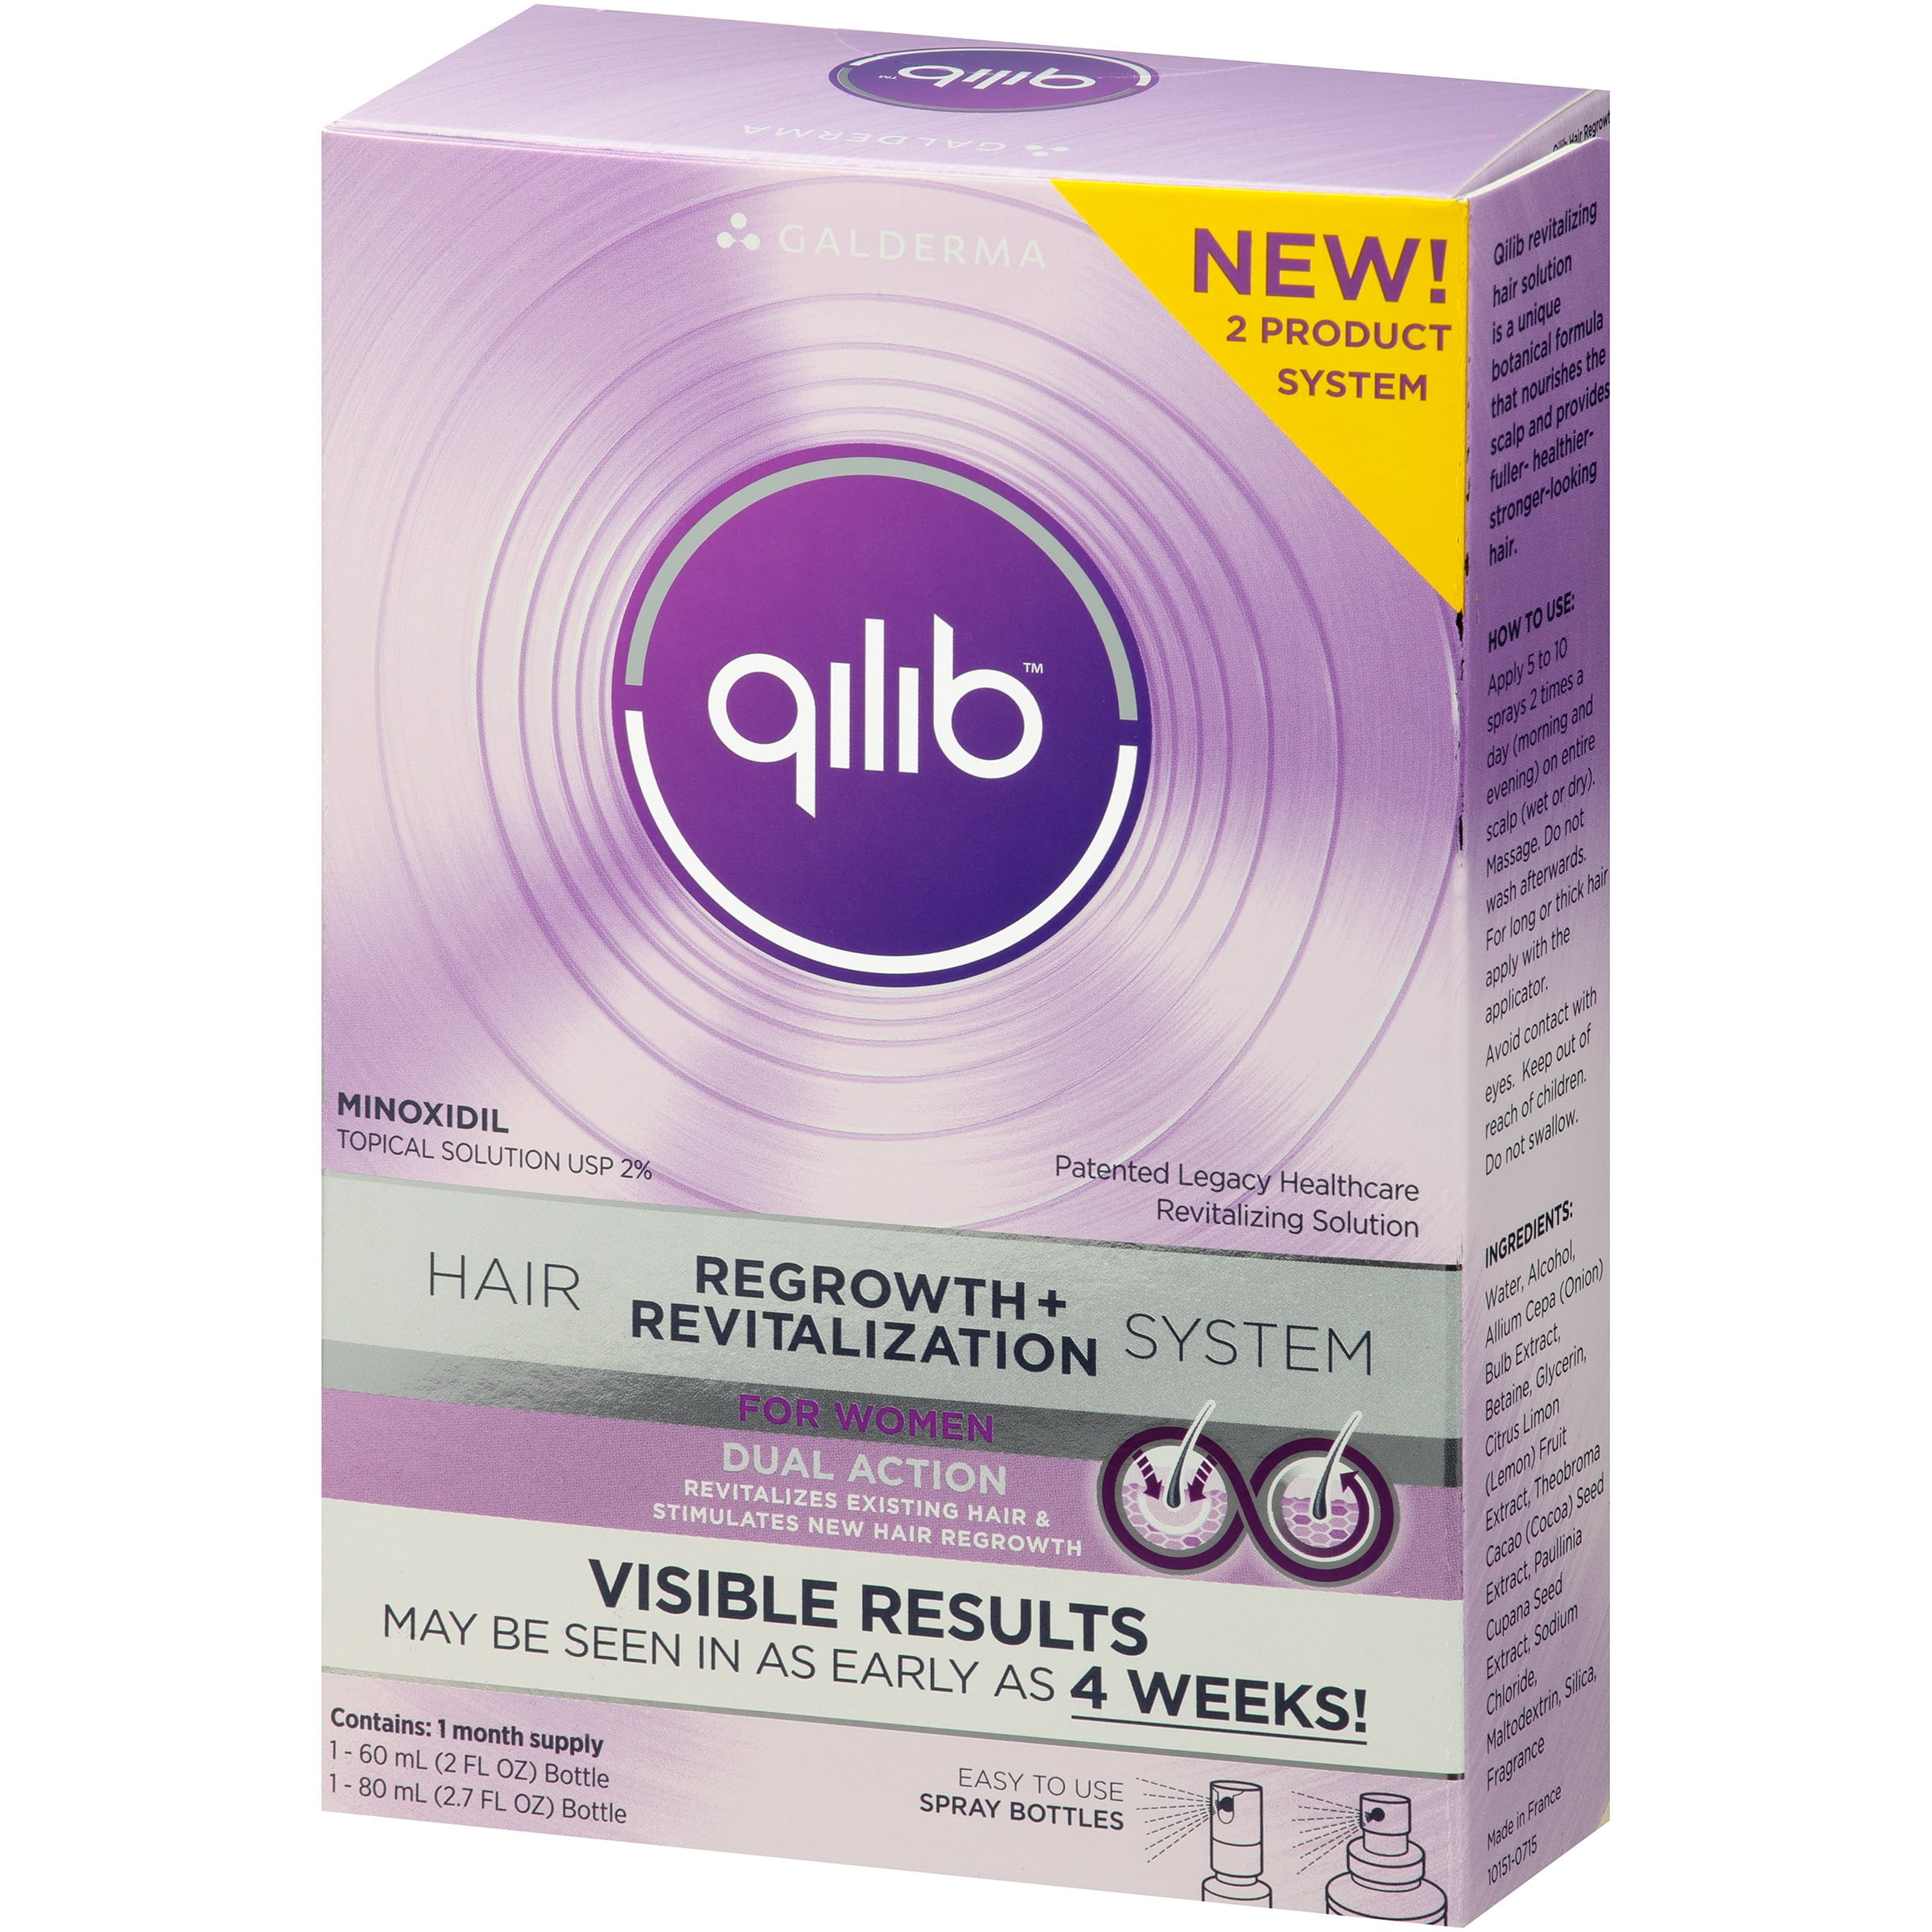 Qilib Hair Regrowth + Revitalization System for Women 2 Product System   fl. oz. Box 